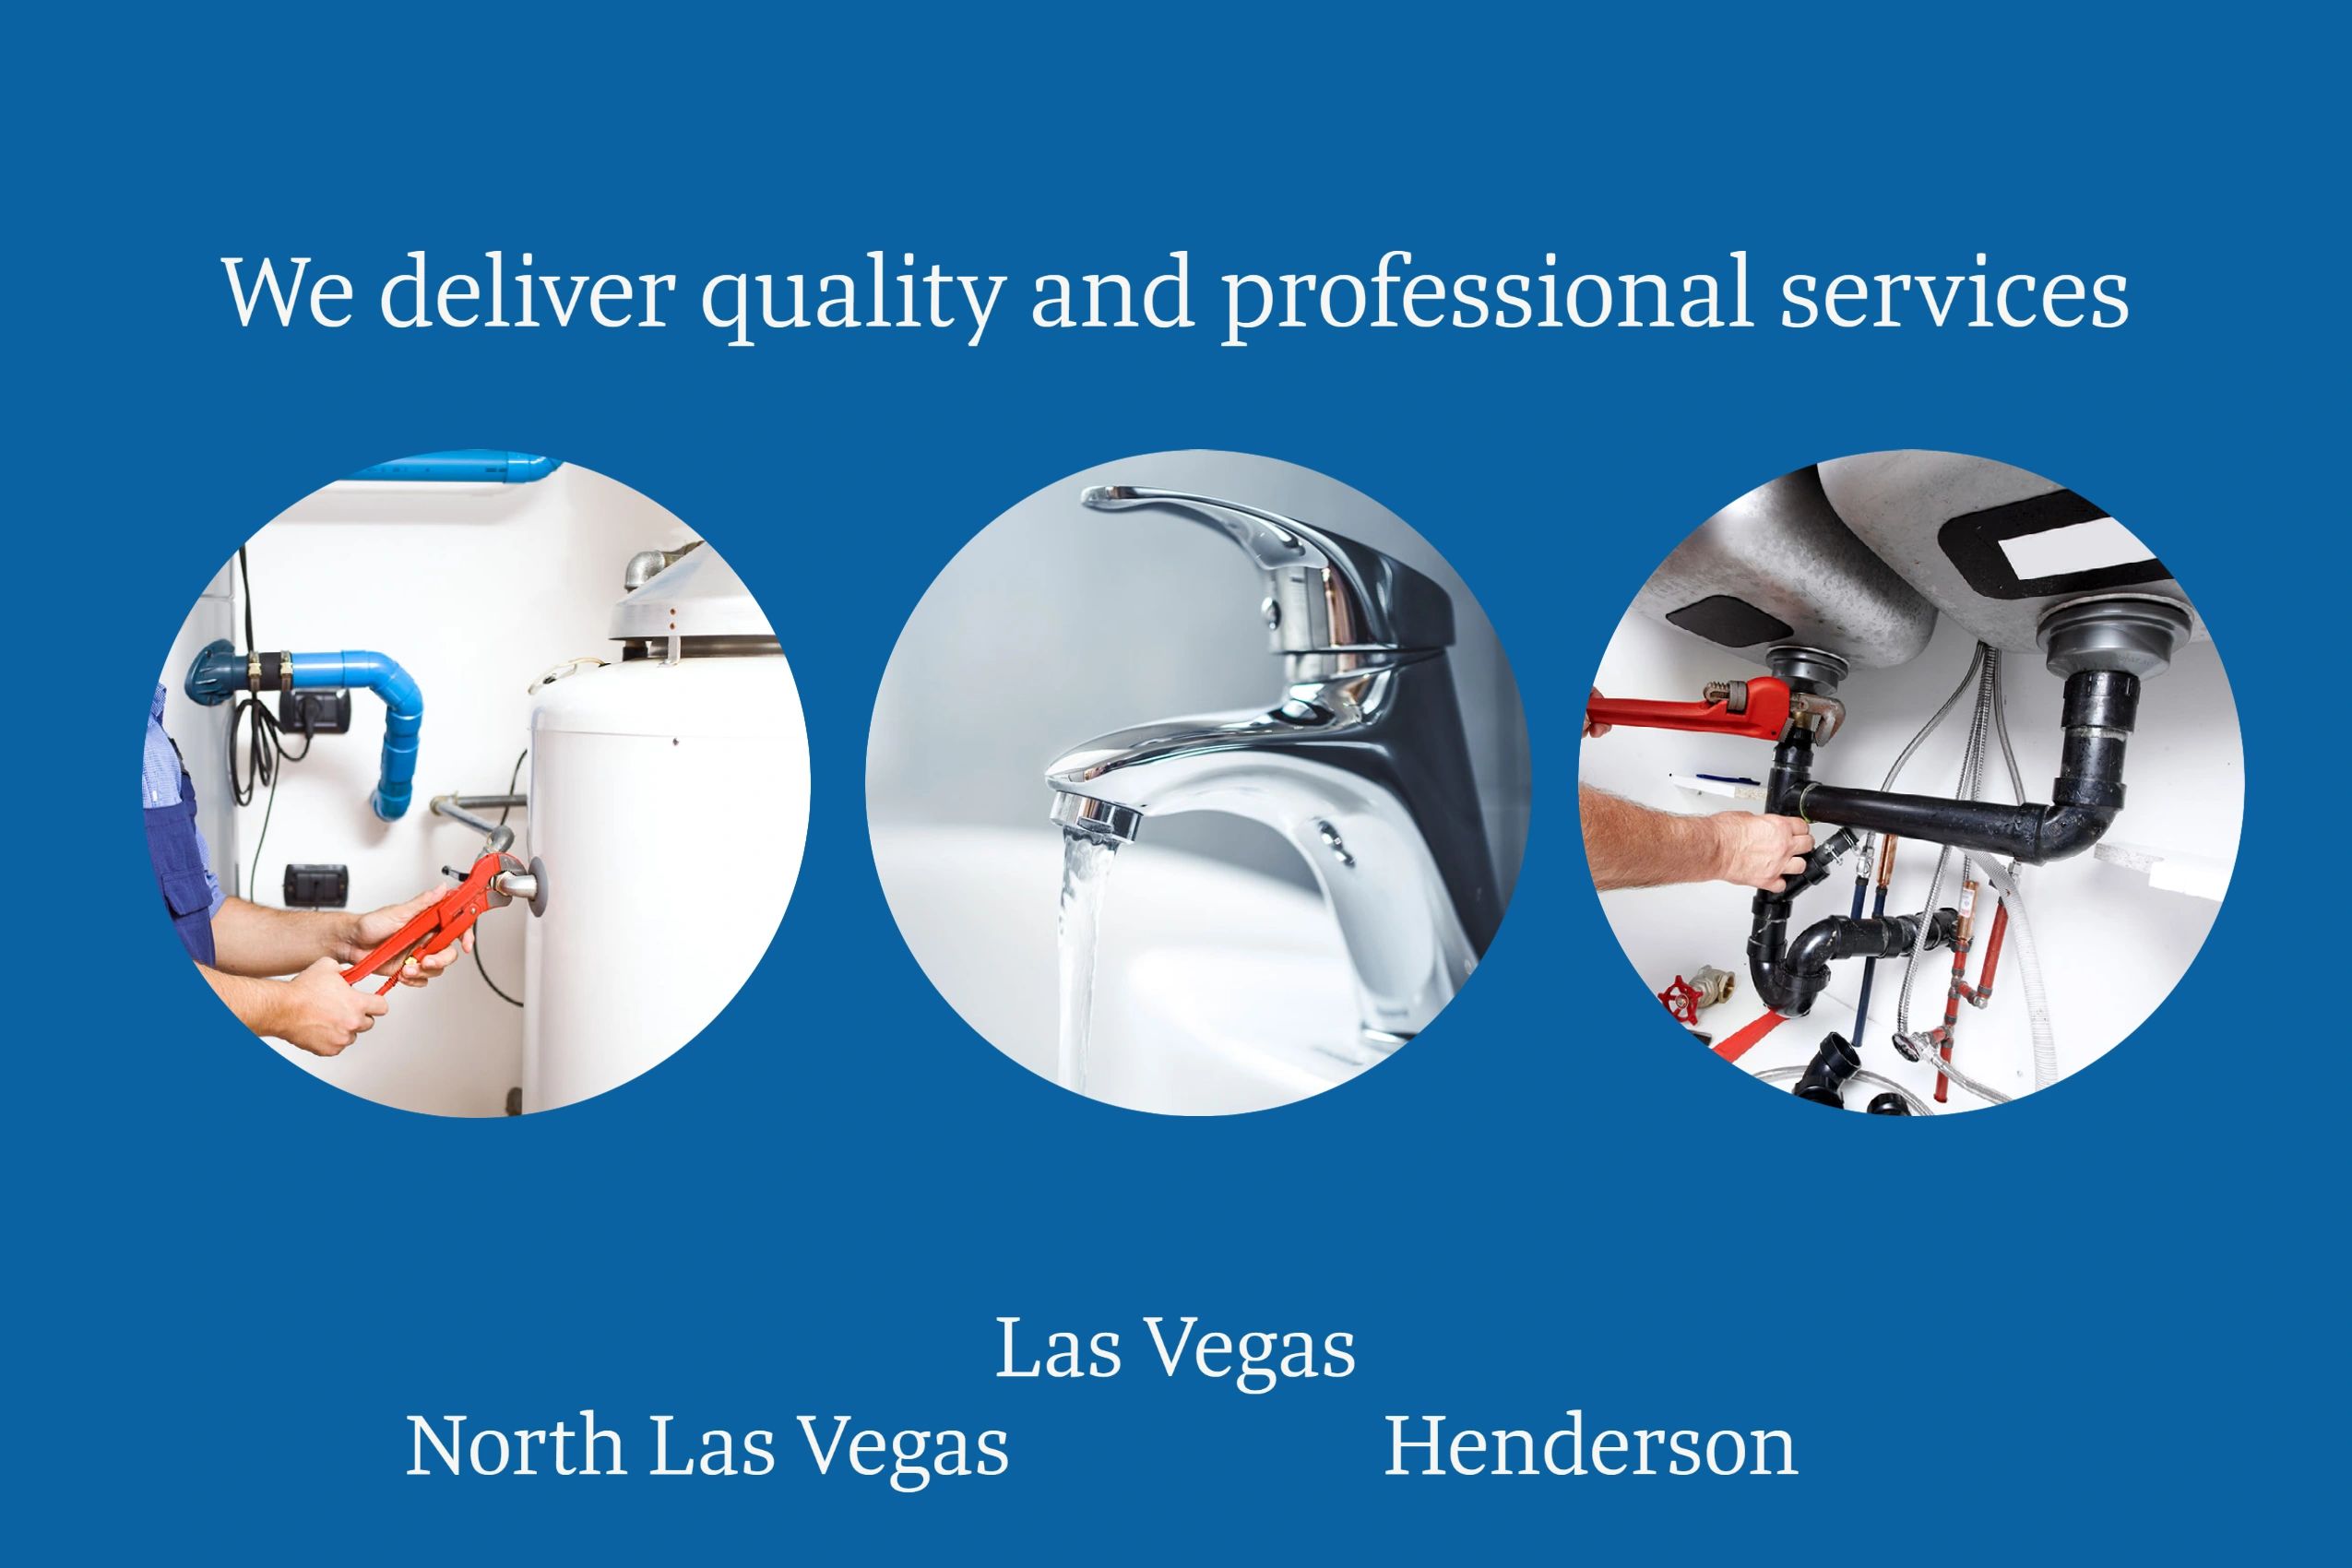 Plumbing and Drain Services in Las Vegas, NV - Water Wise Plumbing